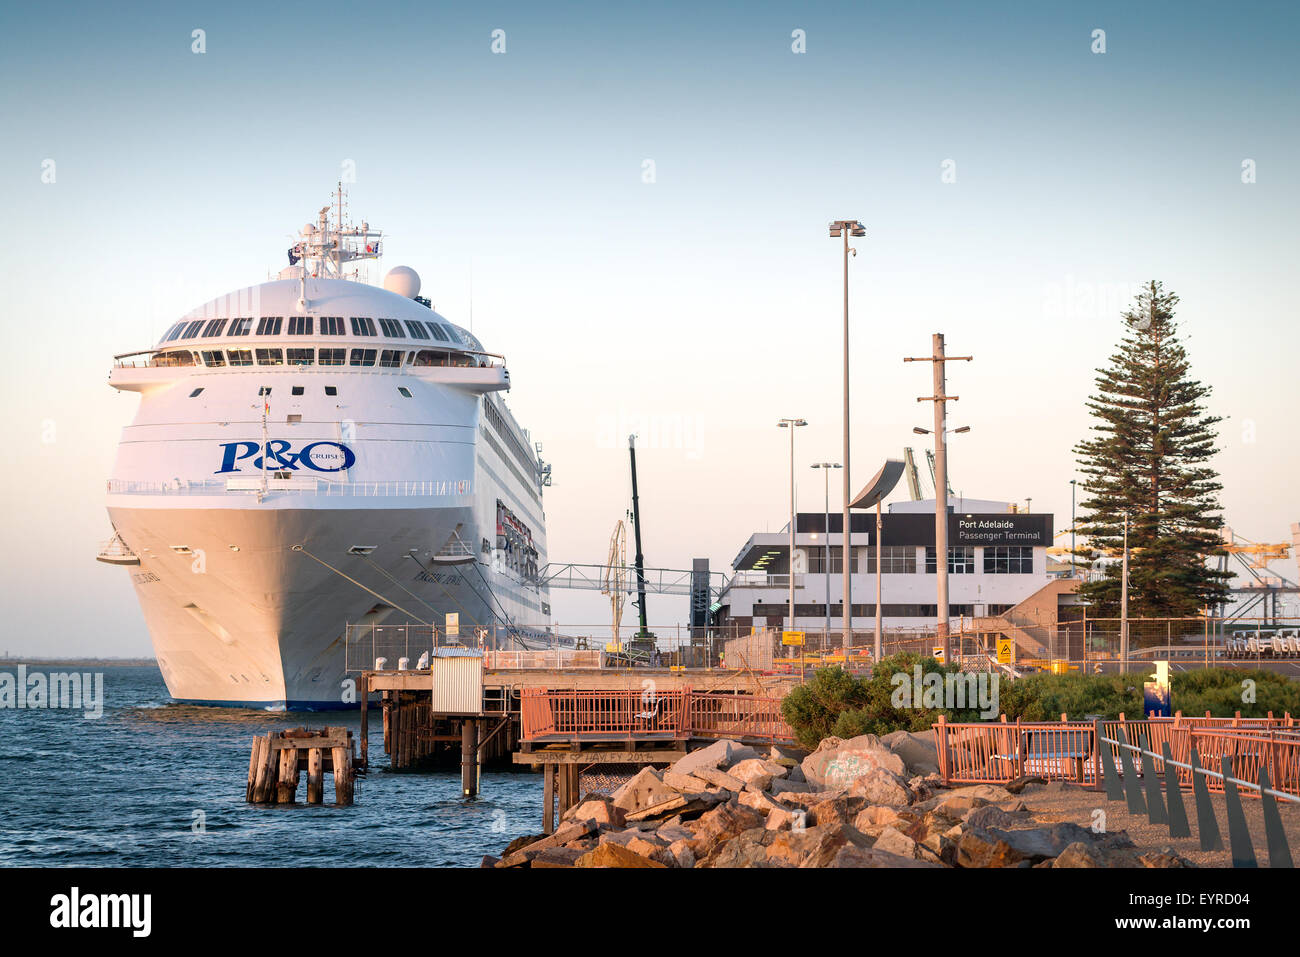 Adelaide, Australien - 5. März 2015: P & O Pacific Jewel Kreuzfahrtschiff ist Port Adelaide abholen Passagiere angedockt Stockfoto